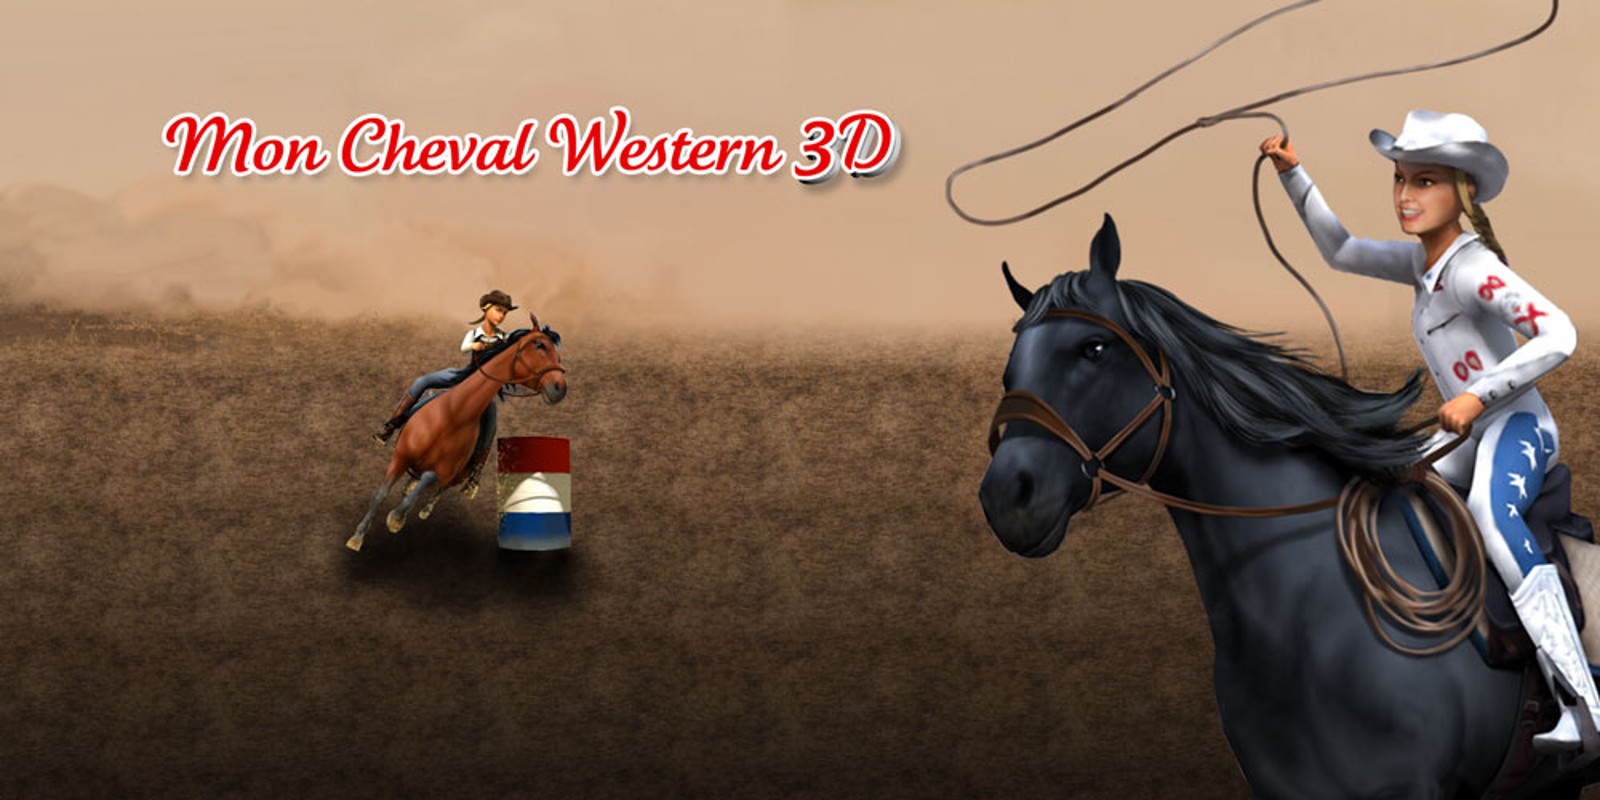 Mon Cheval Western 3D